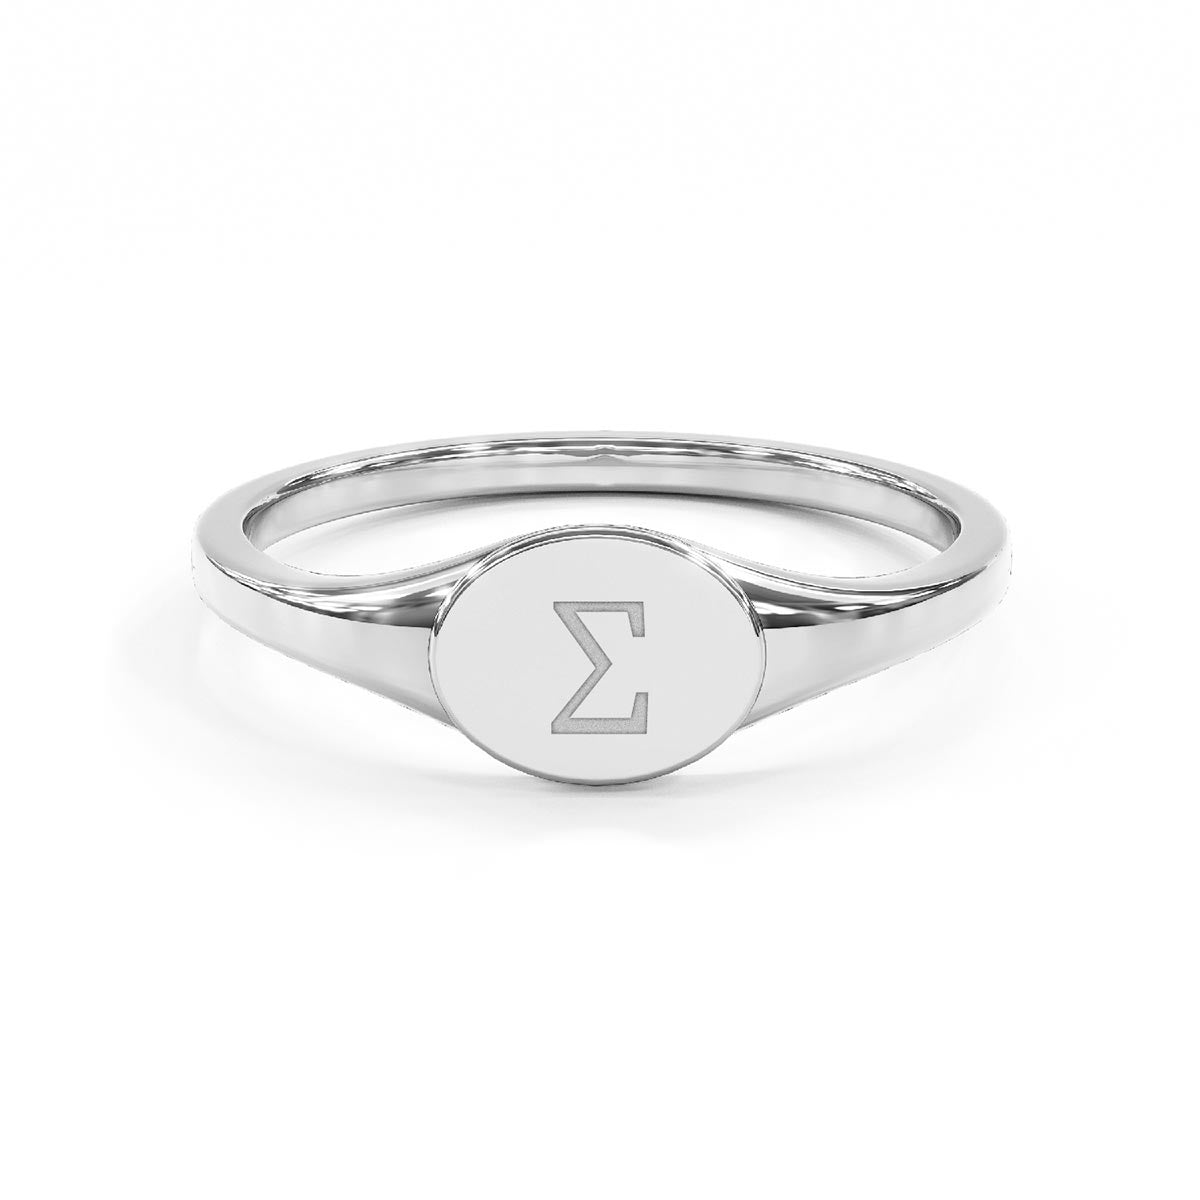 Greek Initial Signet Ring